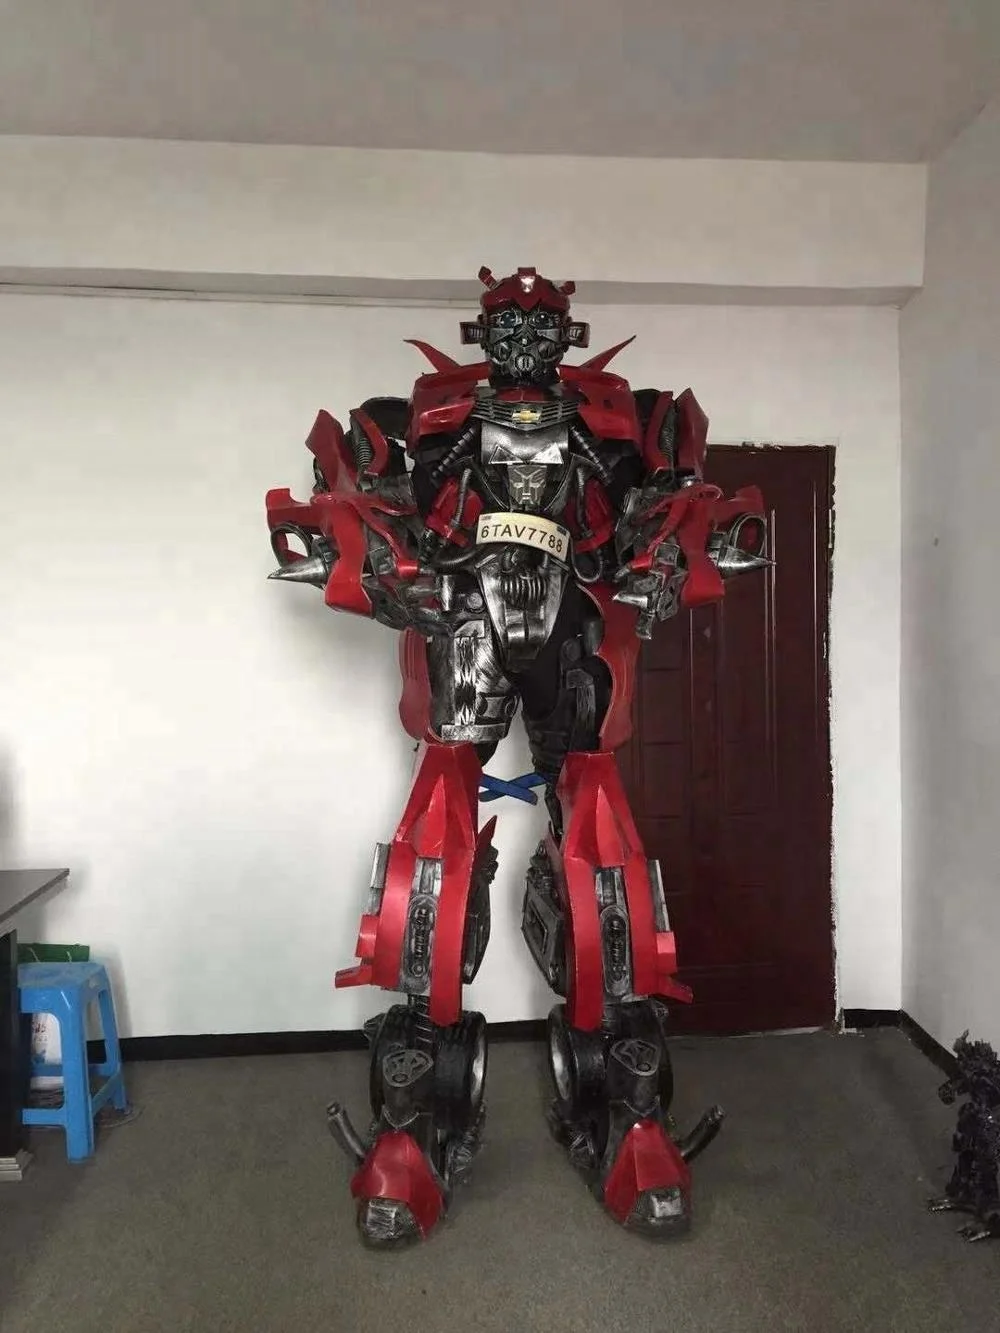 
Human Size Bumble bee Cosplay Dancing Robot Costume 